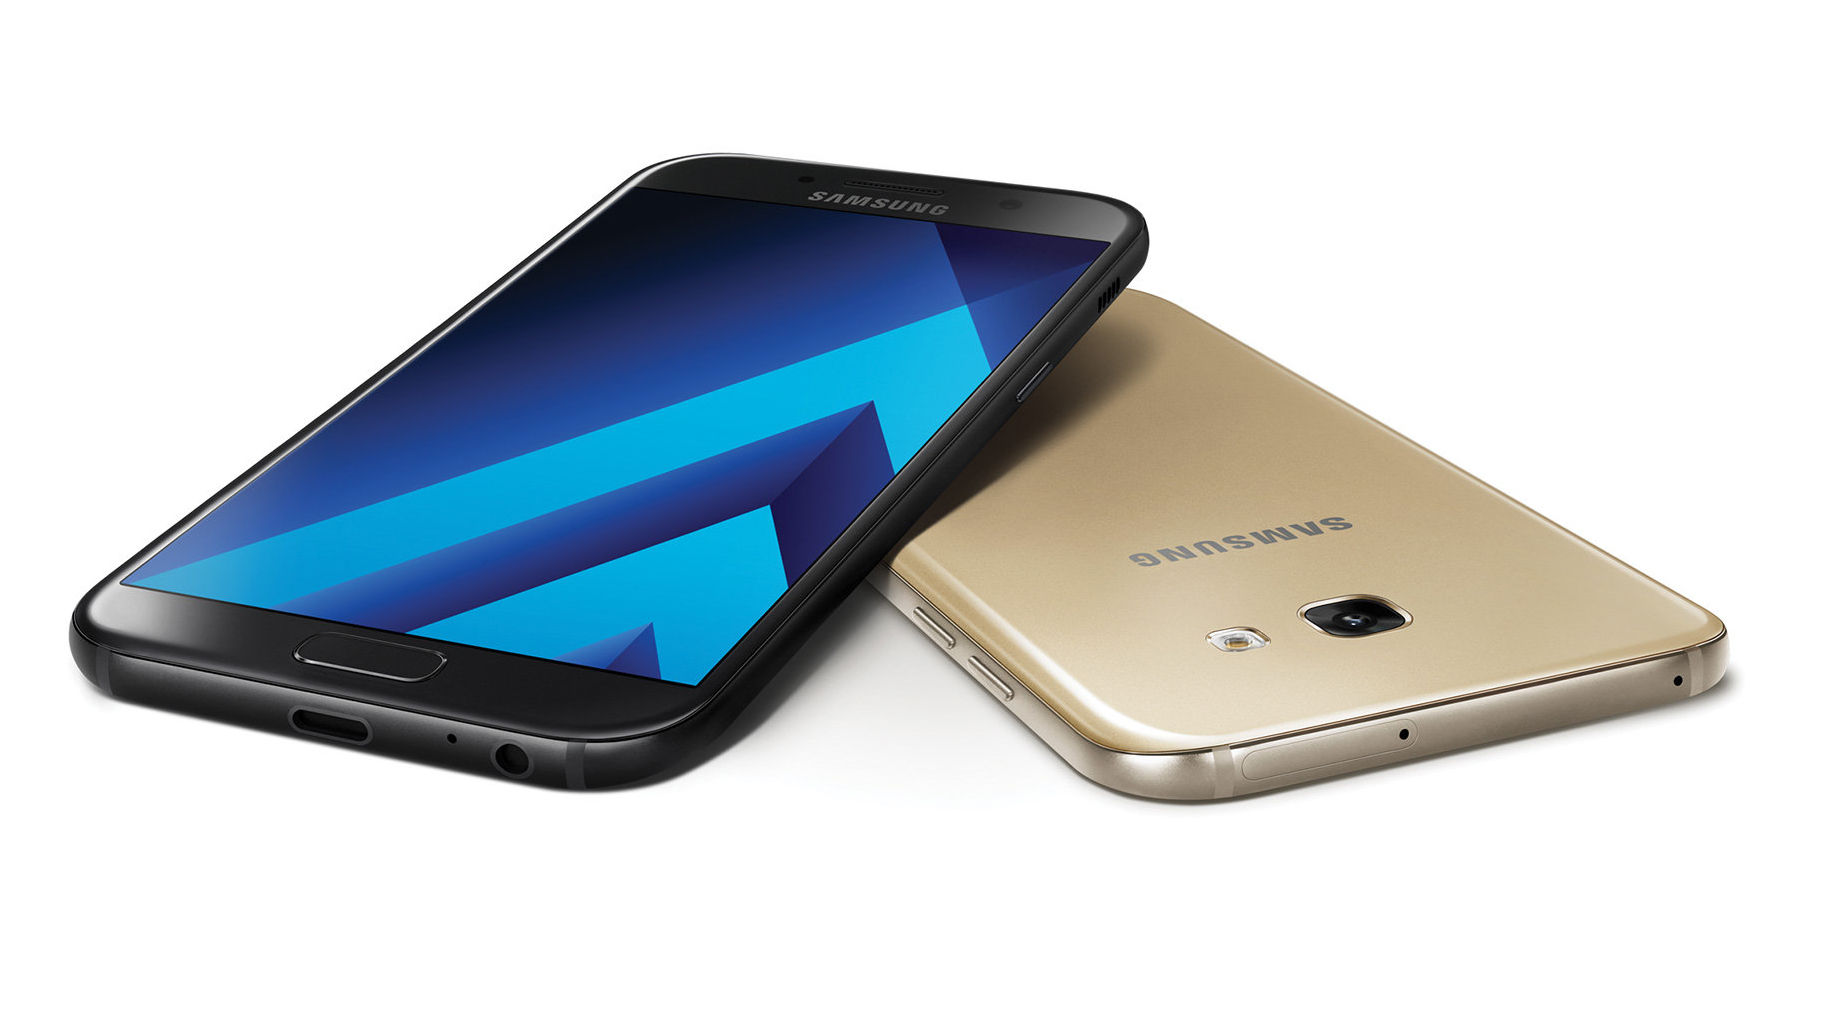 struik Stevenson Migratie Samsung Galaxy A5 review: Samsung's mid-range gets a makeover | T3